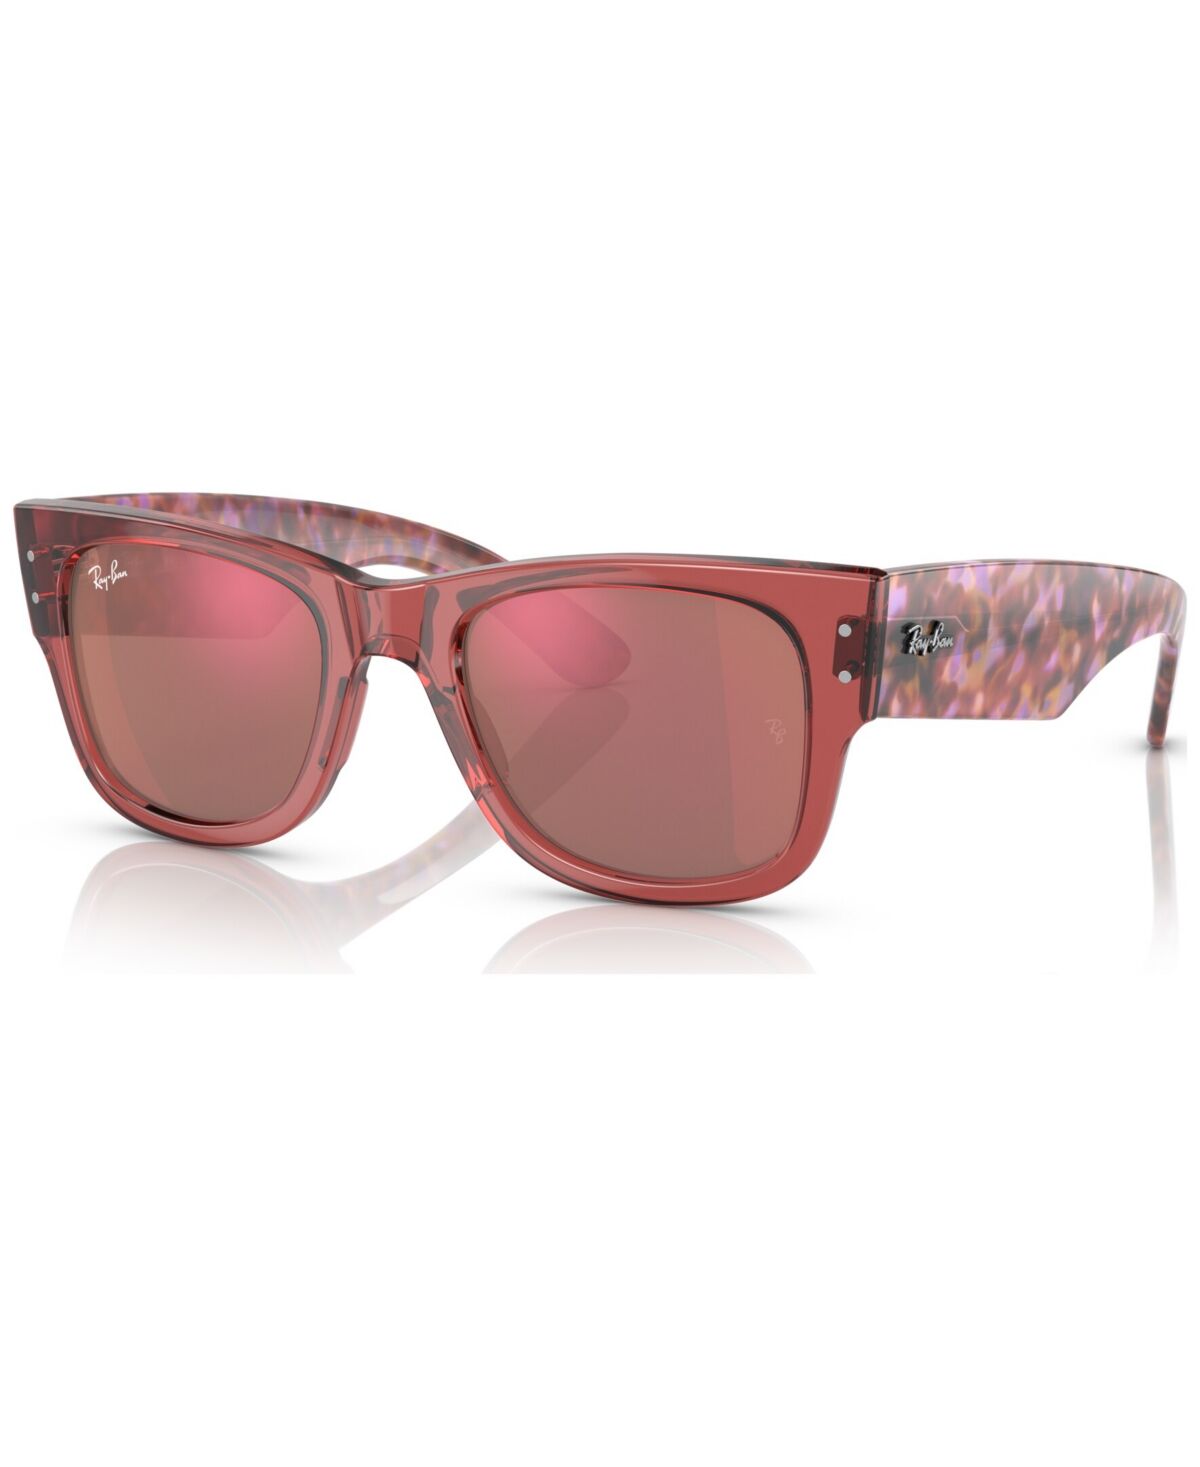 Ray-Ban Mega Wayfarer 51 Unisex Sunglasses - Transparent Pink